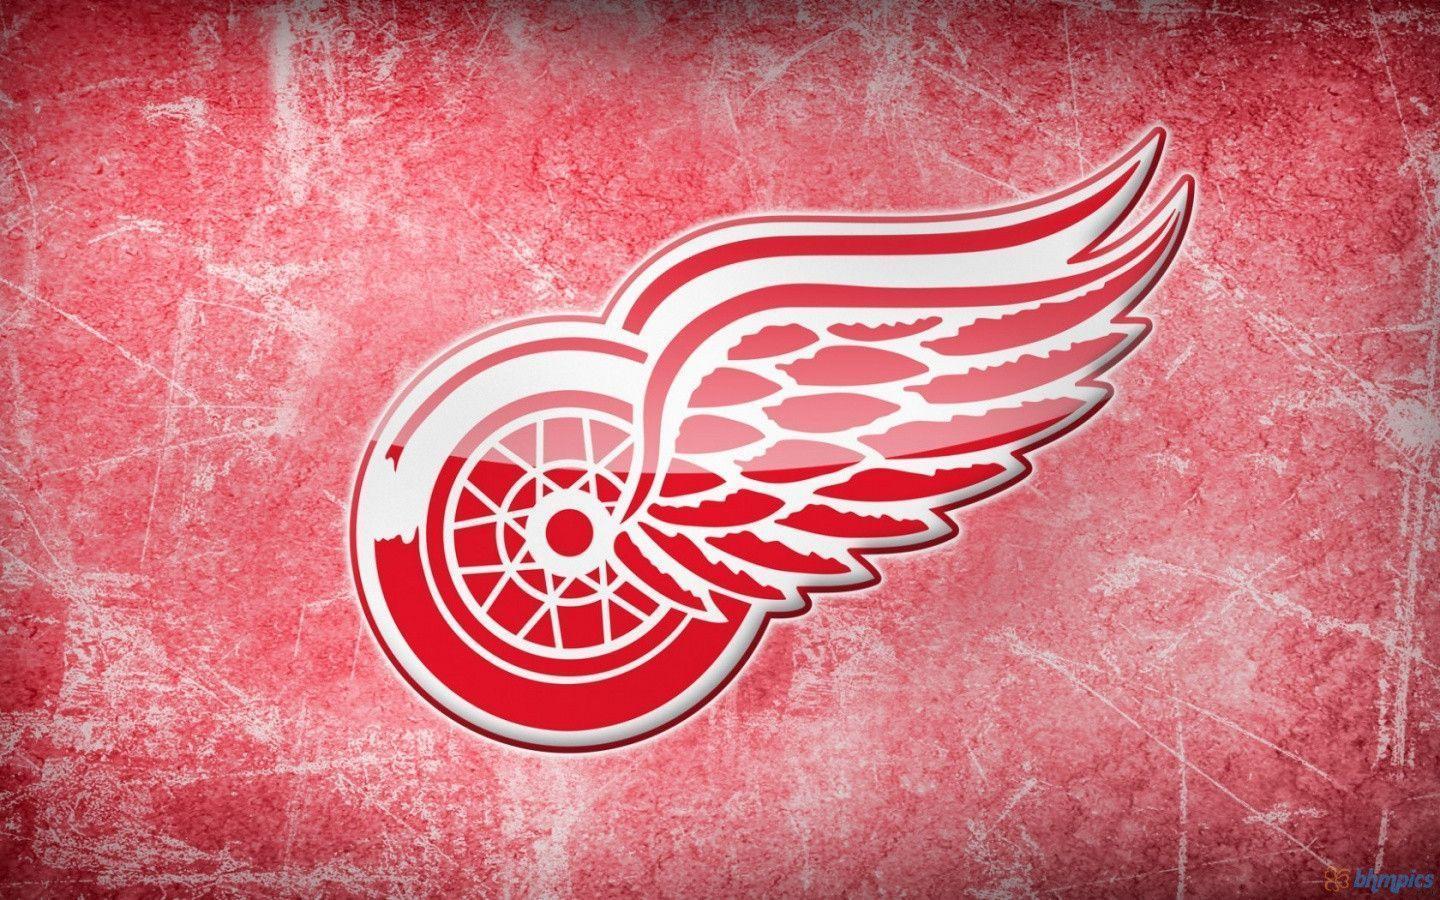 Detroit Red Wings Ice Storm Steve Yzerman Kris Draper Axel Sandin Pellikka Justin Holl Slava Fetisov Dominik Hasek